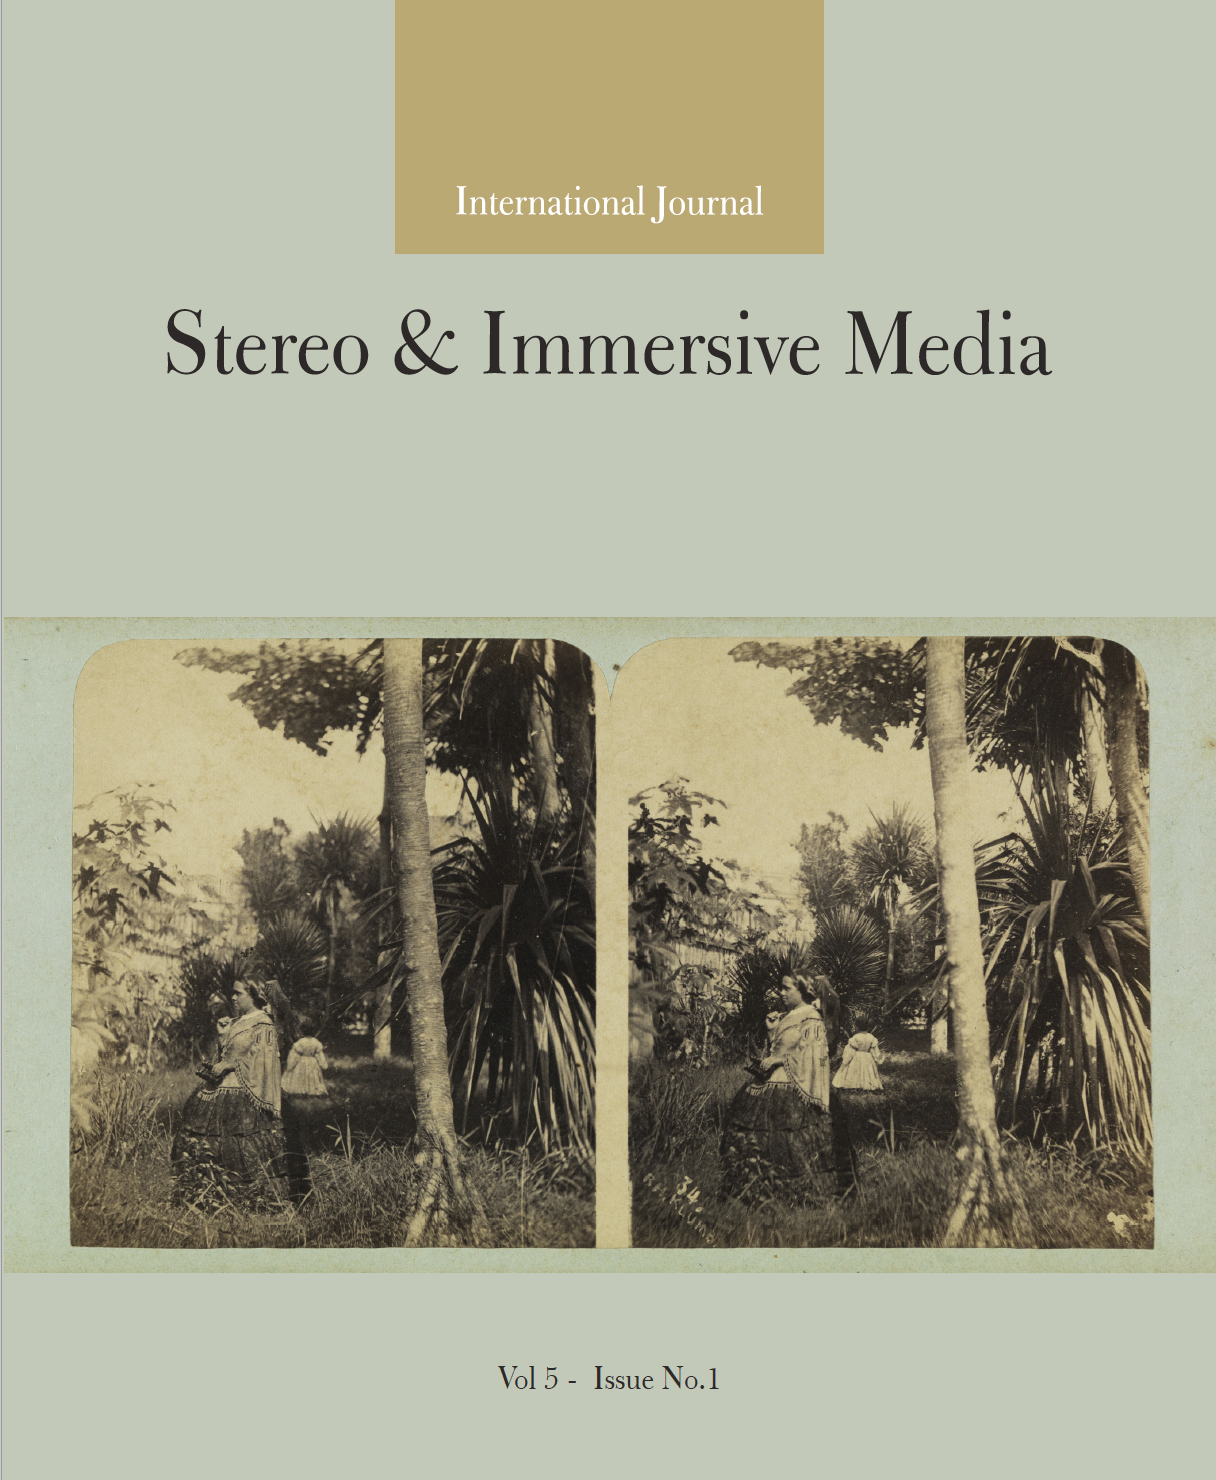 Vol. 5 No. 1 (2021): International Journal on Stereo & Immersive Media